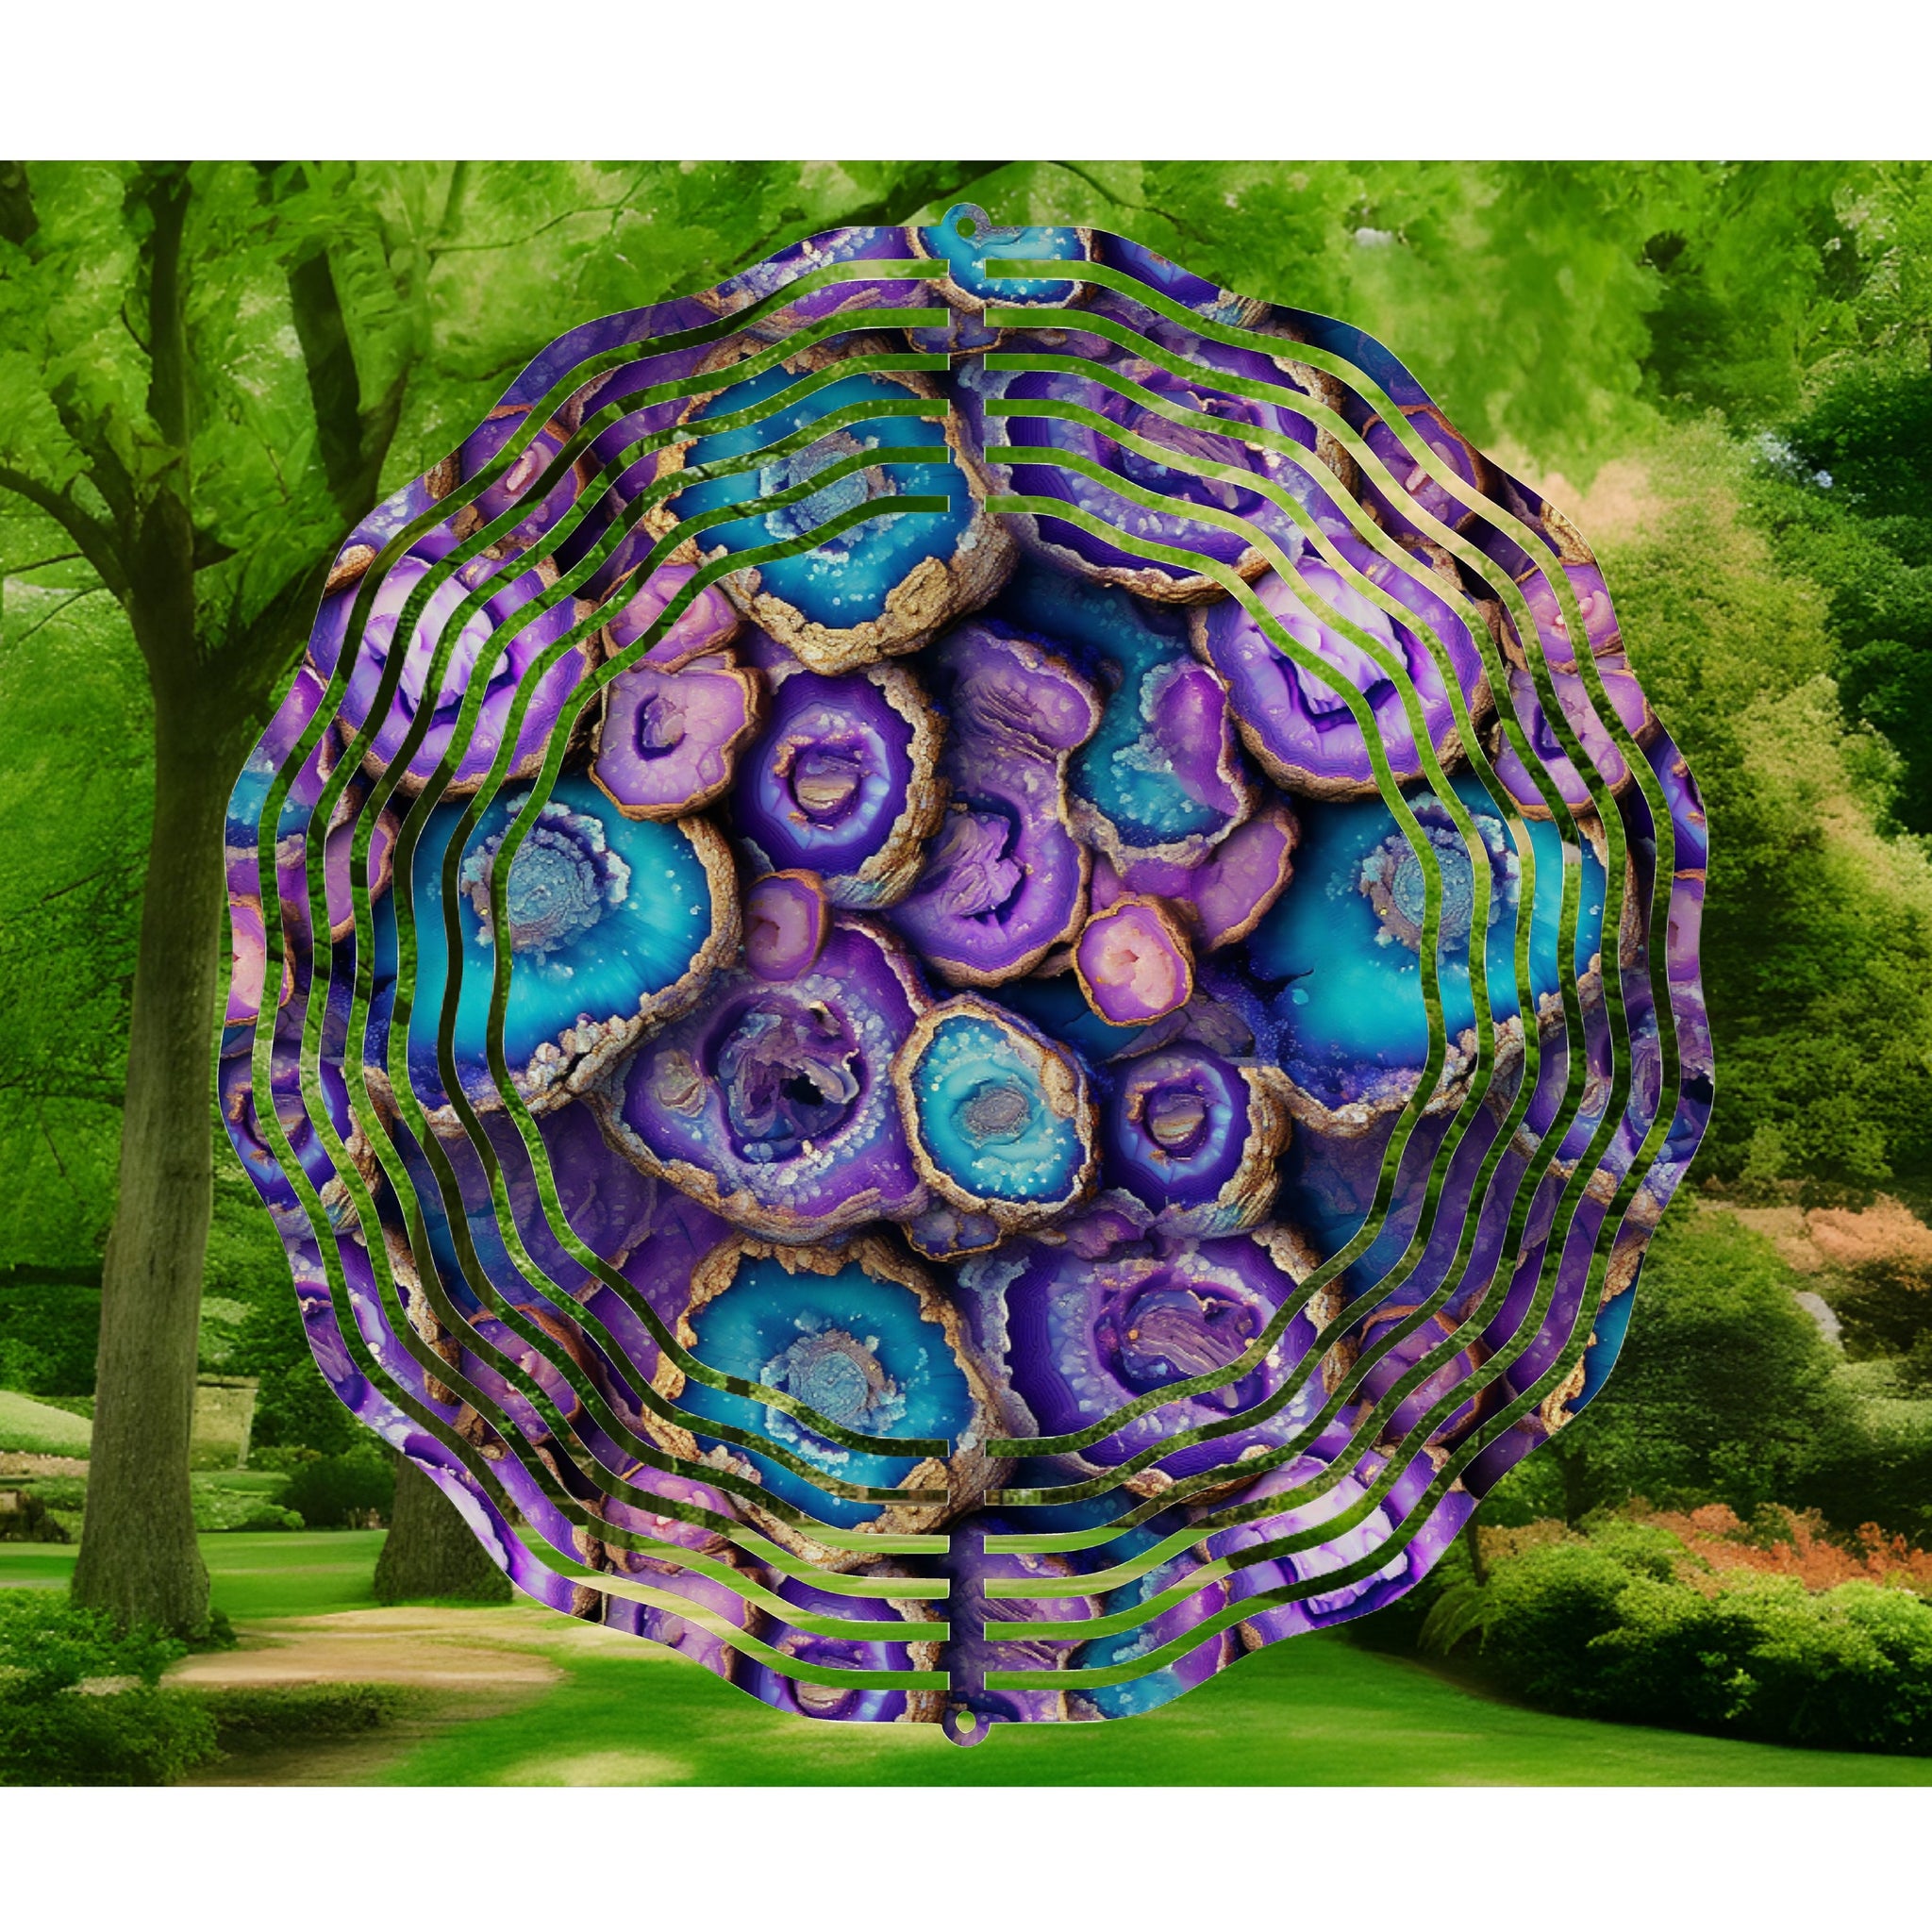 3D Geode, Wind Spinners, Yard Art, Garden Decorations, Patio Decor